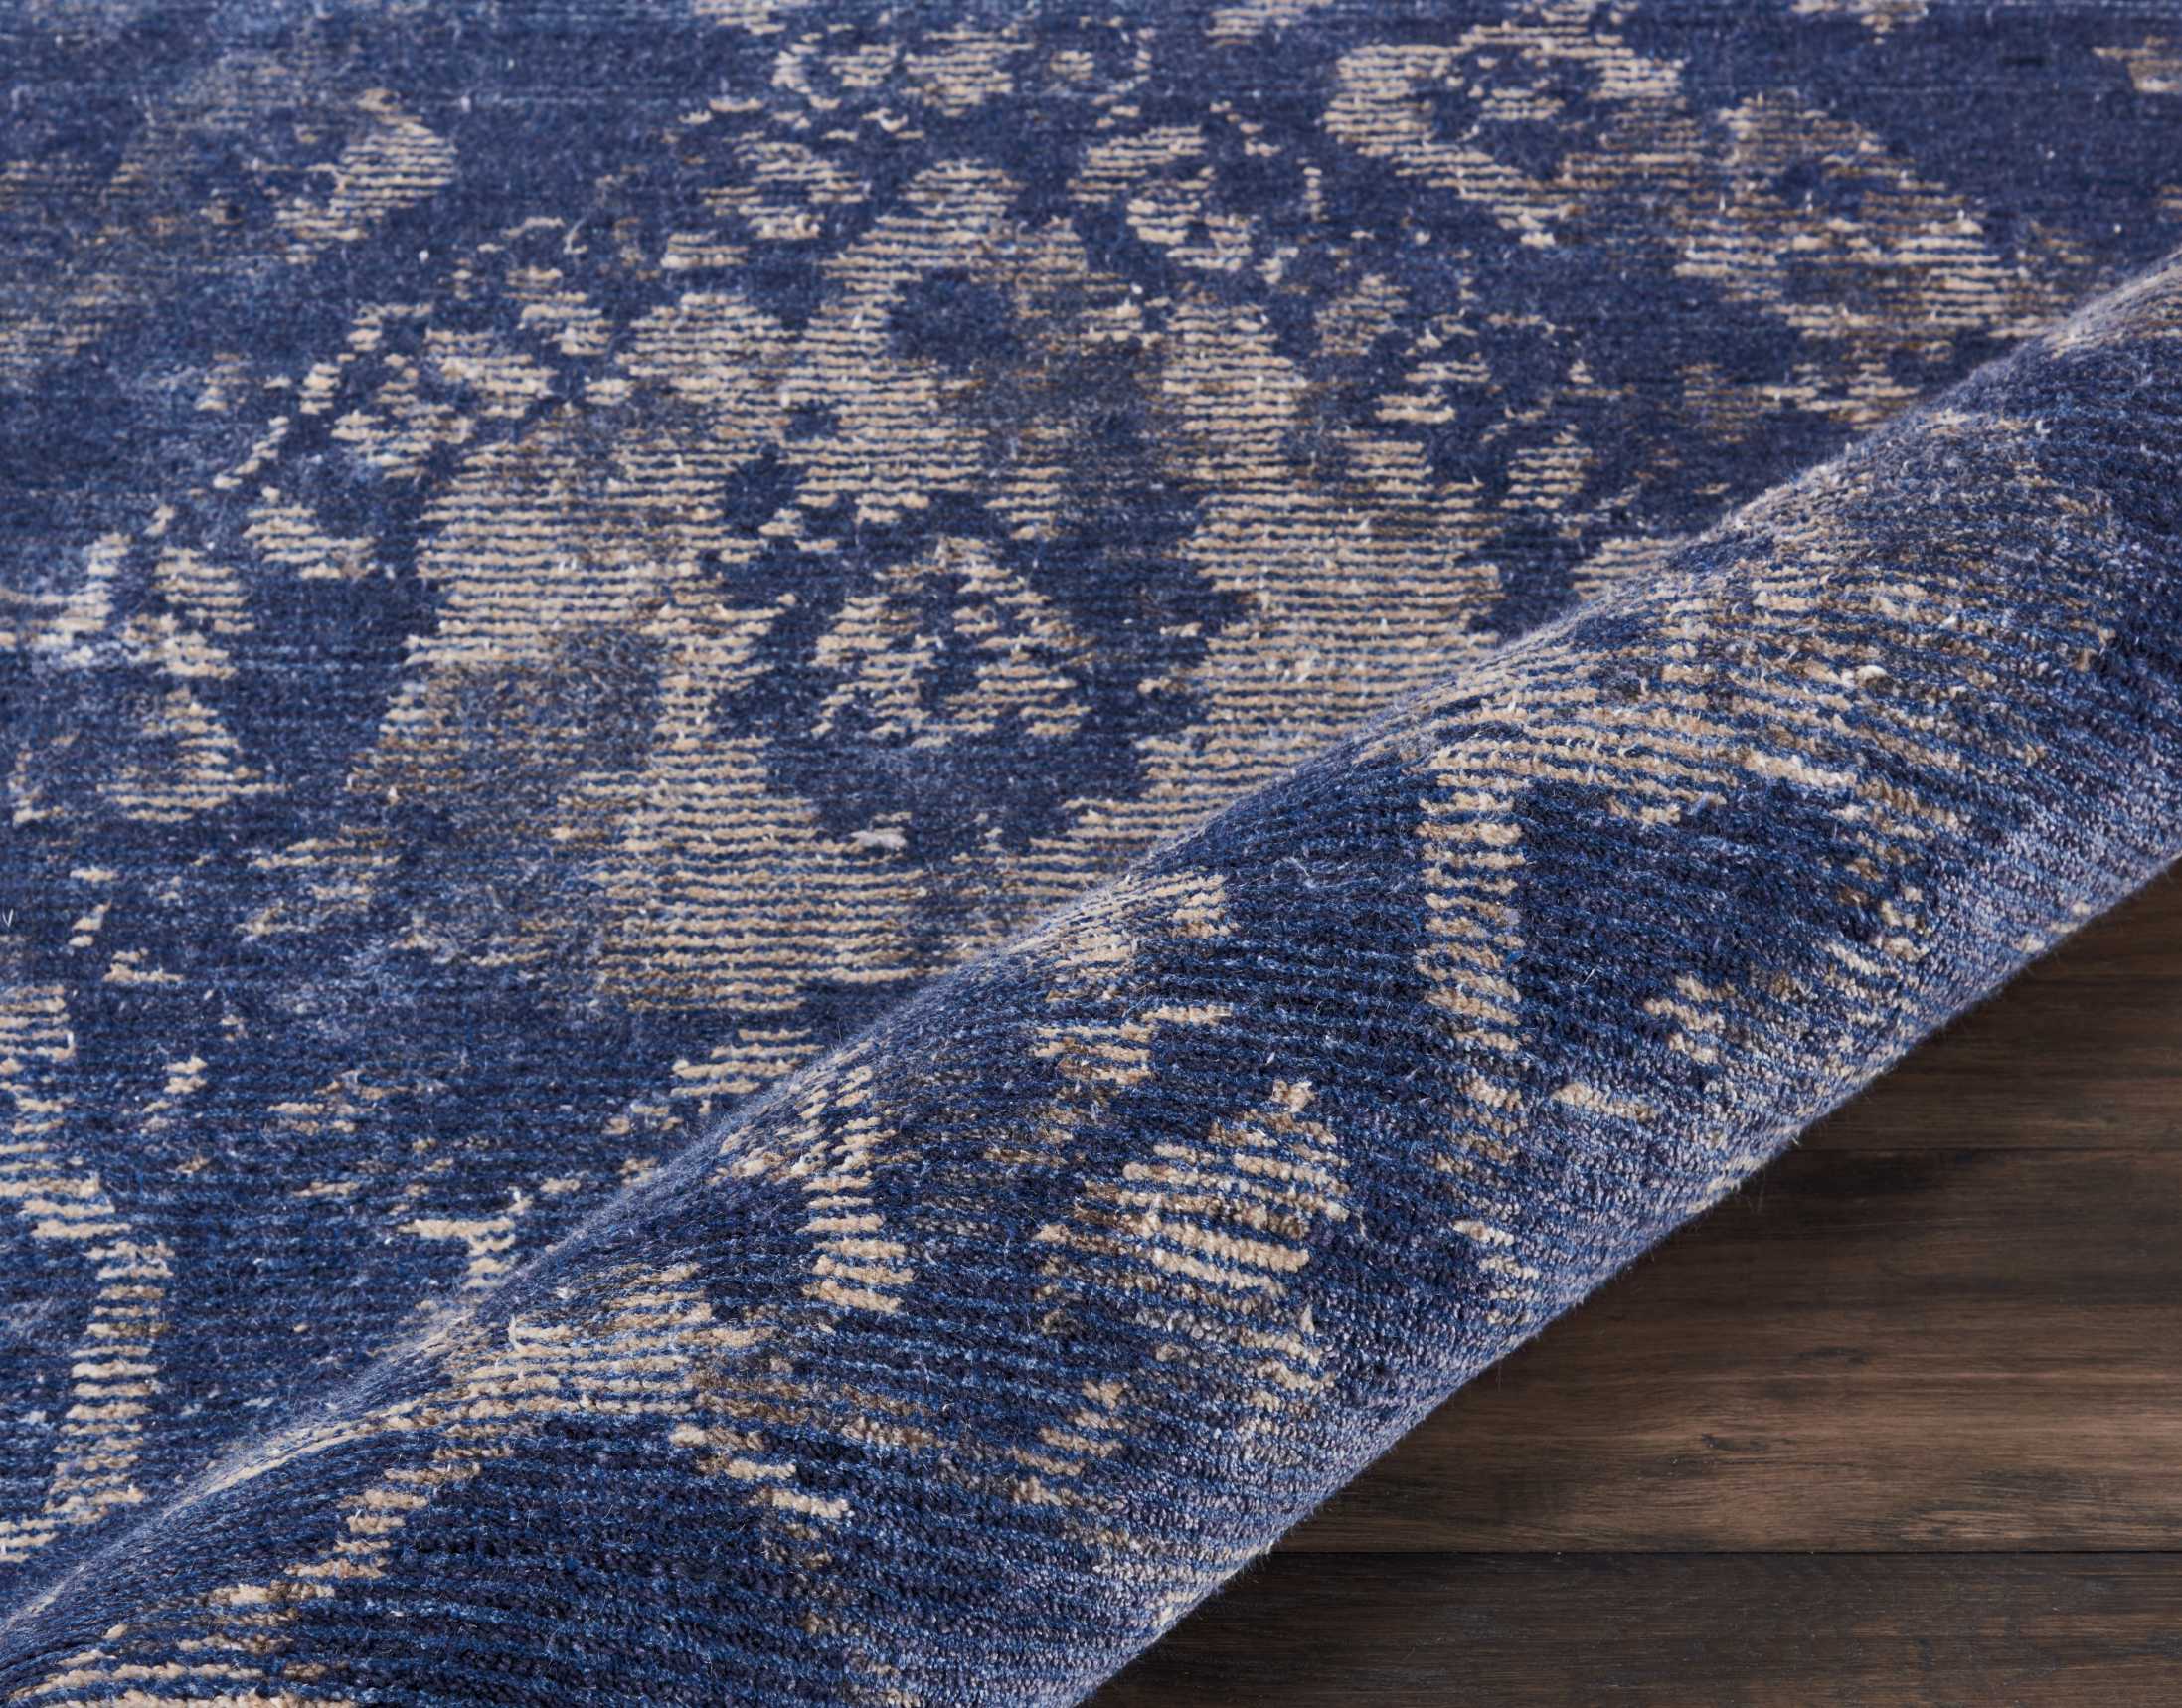 An intricate blue and beige rug showcases its plush fibers.